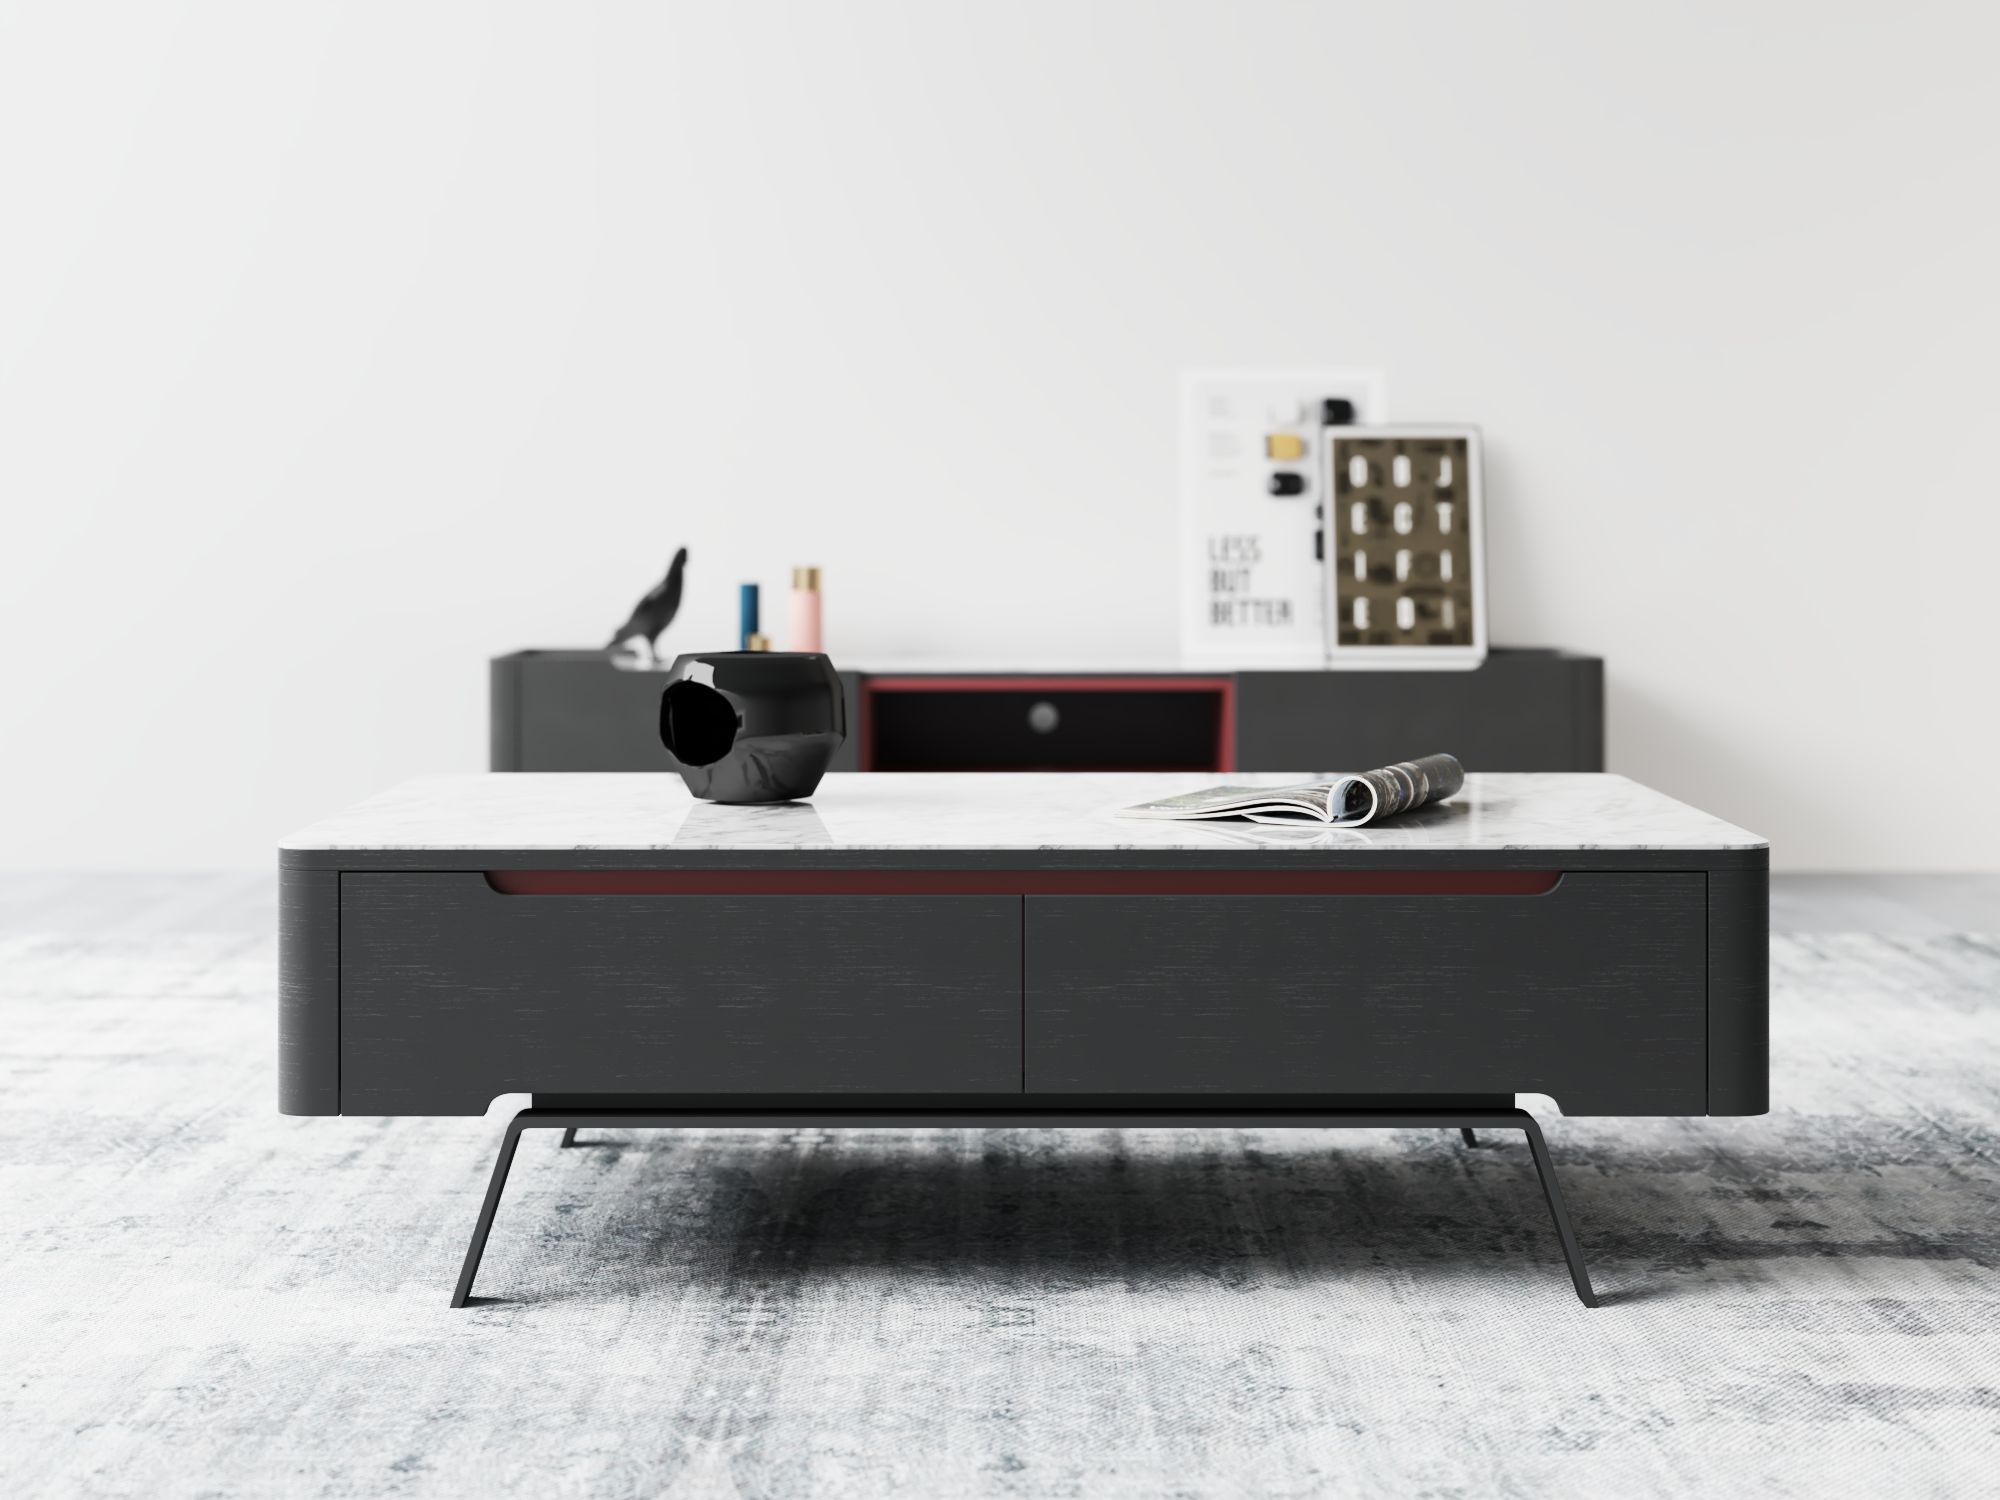 coffee table-china high quality modern design home living room furniture shop-furbyme